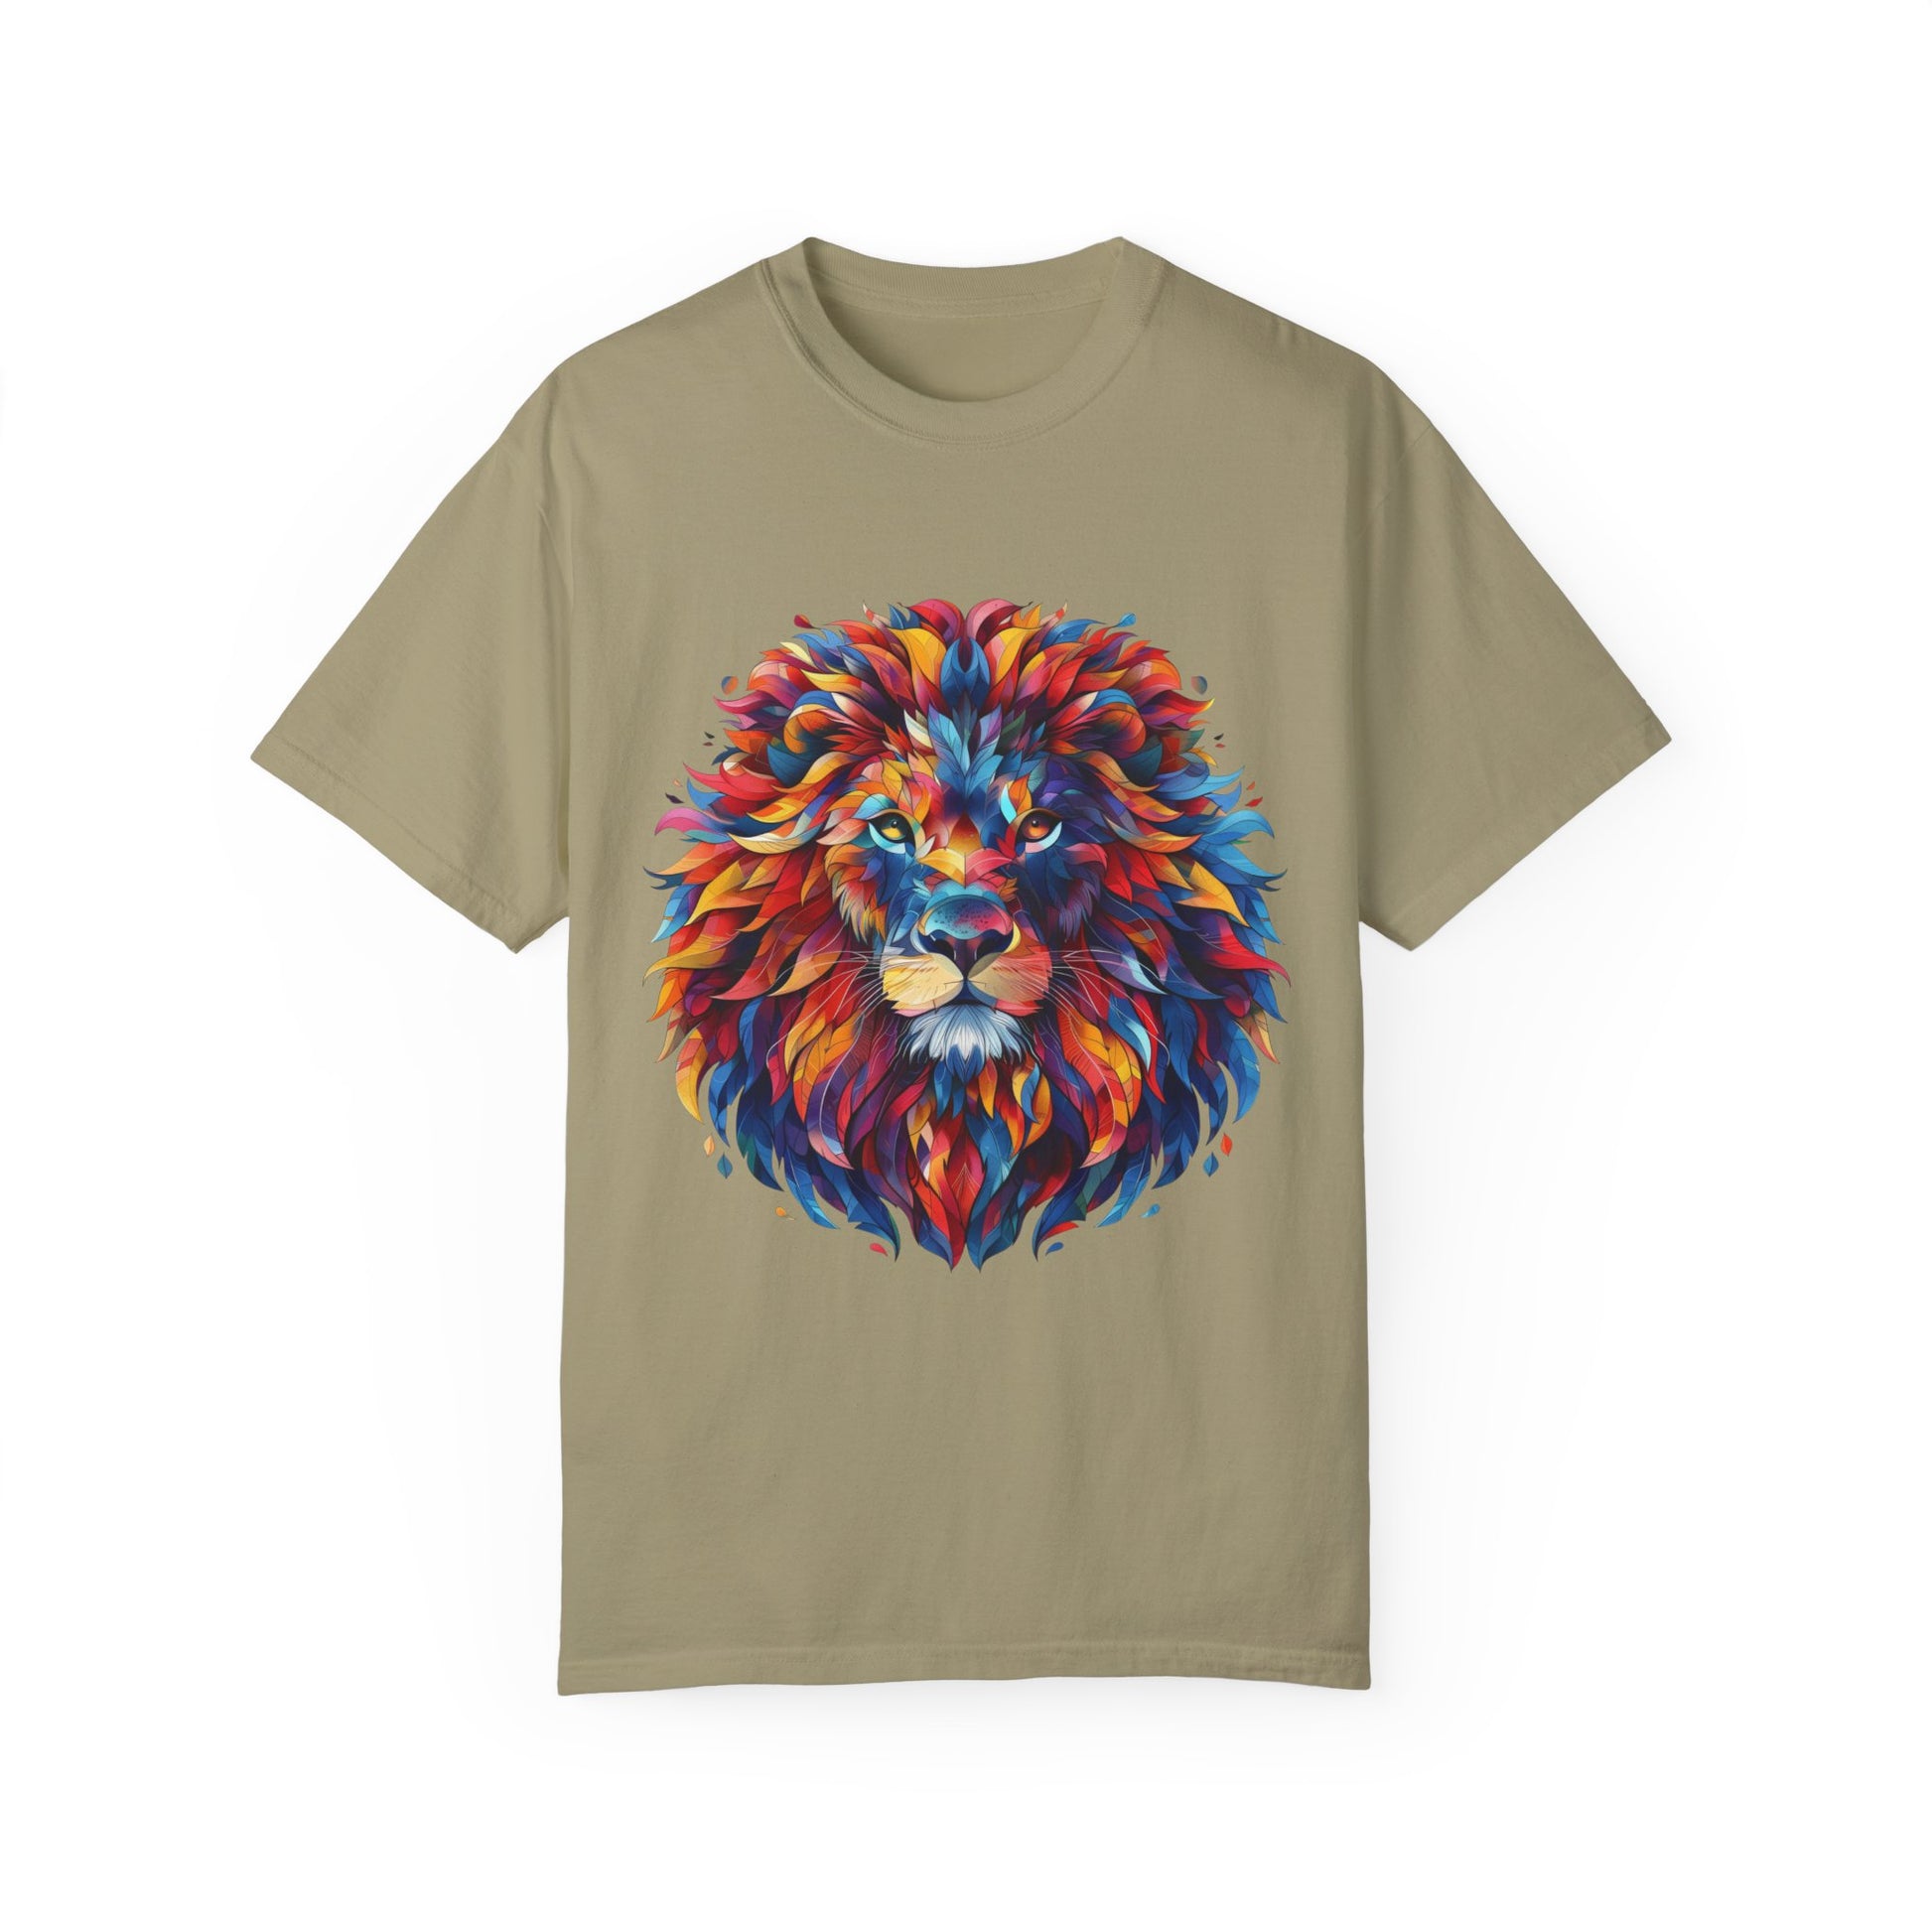 Lion Head Cool Graphic Design Novelty Unisex Garment-dyed T-shirt Cotton Funny Humorous Graphic Soft Premium Unisex Men Women Khaki T-shirt Birthday Gift-11